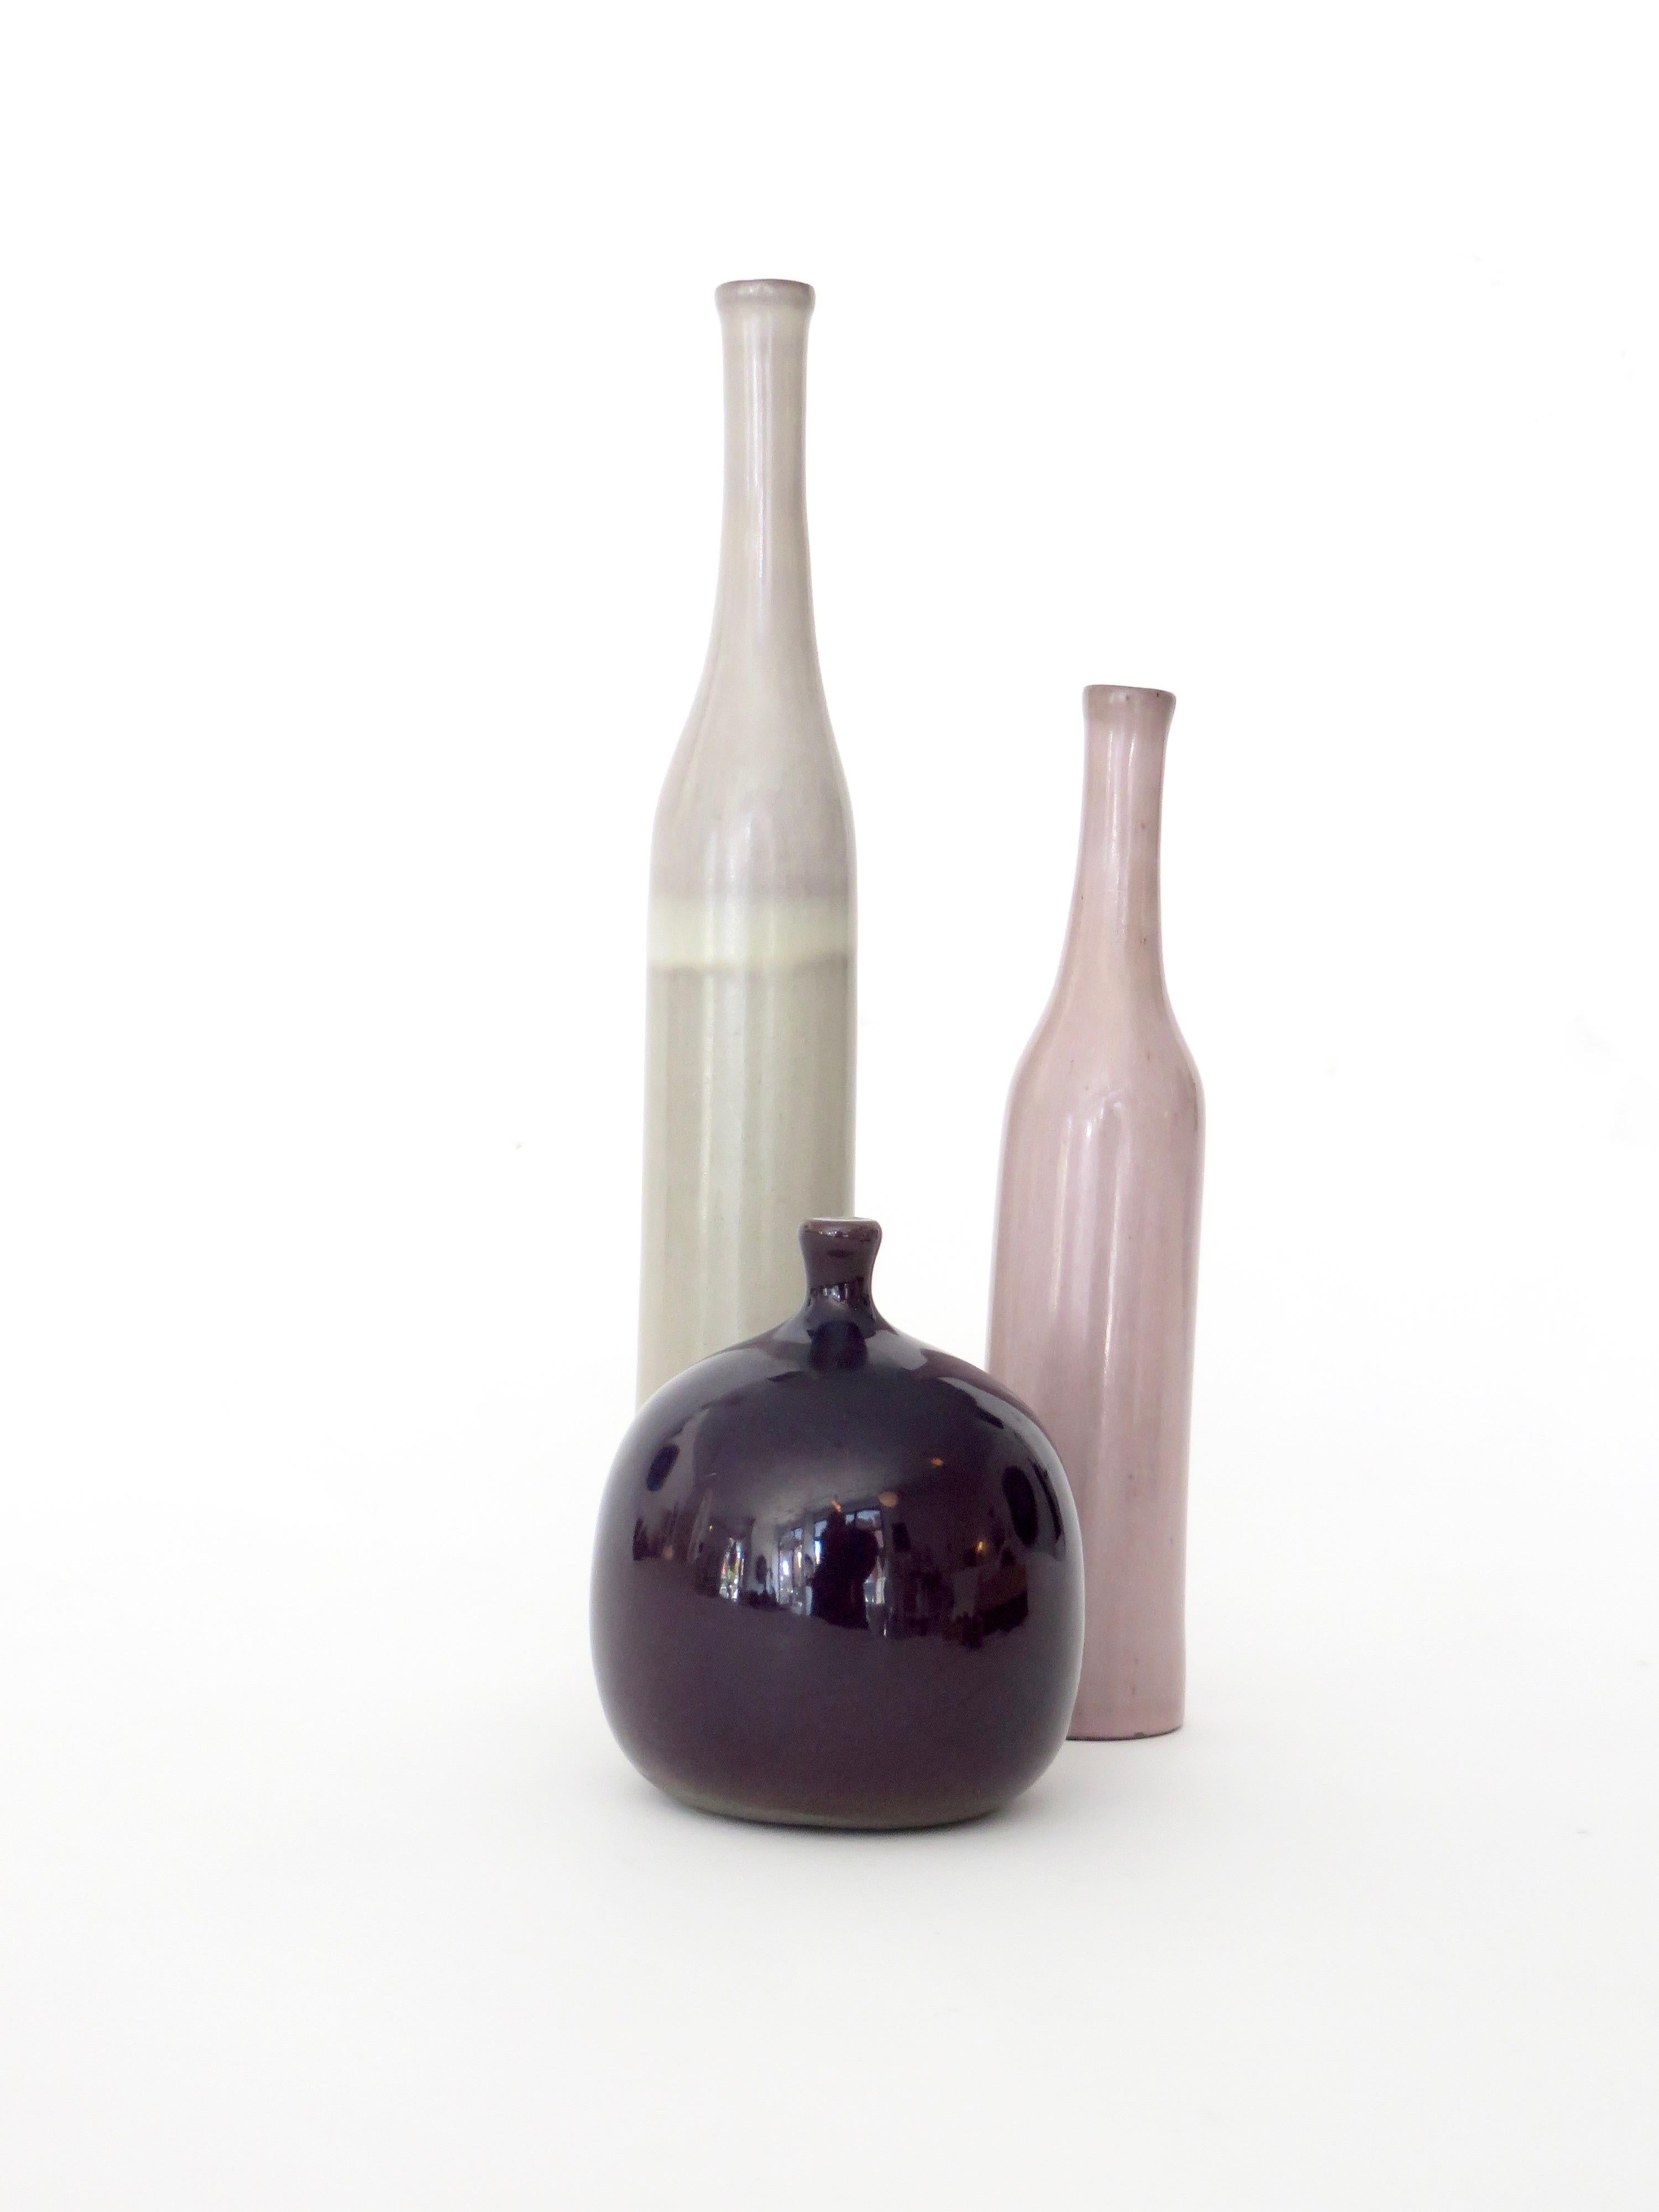 Jacques and Dani Ruelland French Ceramic Artists  Ceramic Vessel Vase 2